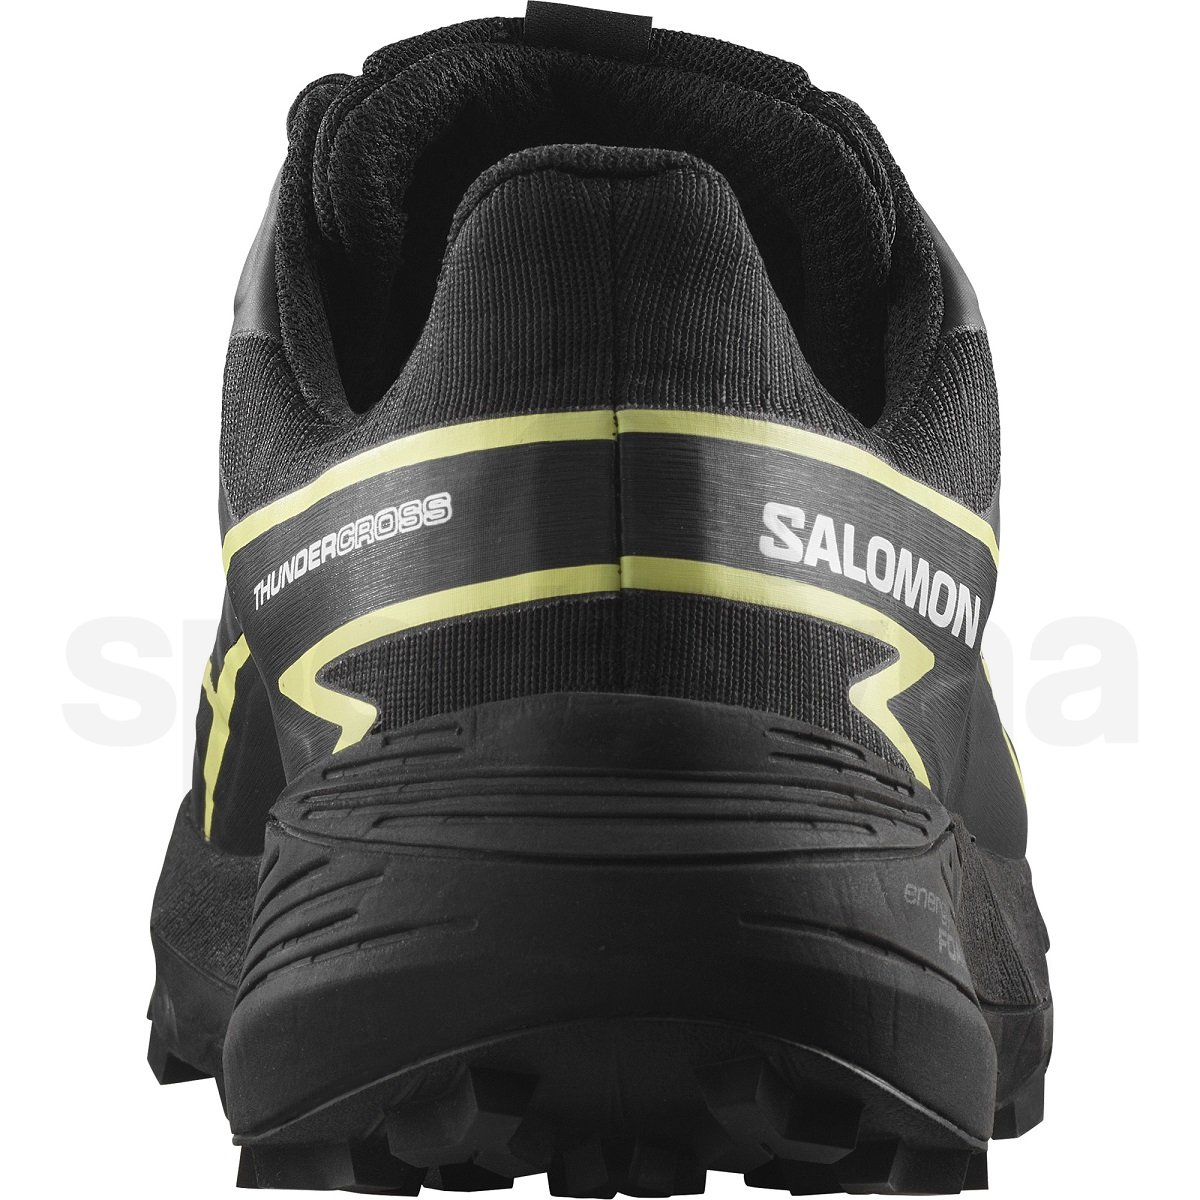 Obuv Salomon Thundercross GTX W - černá